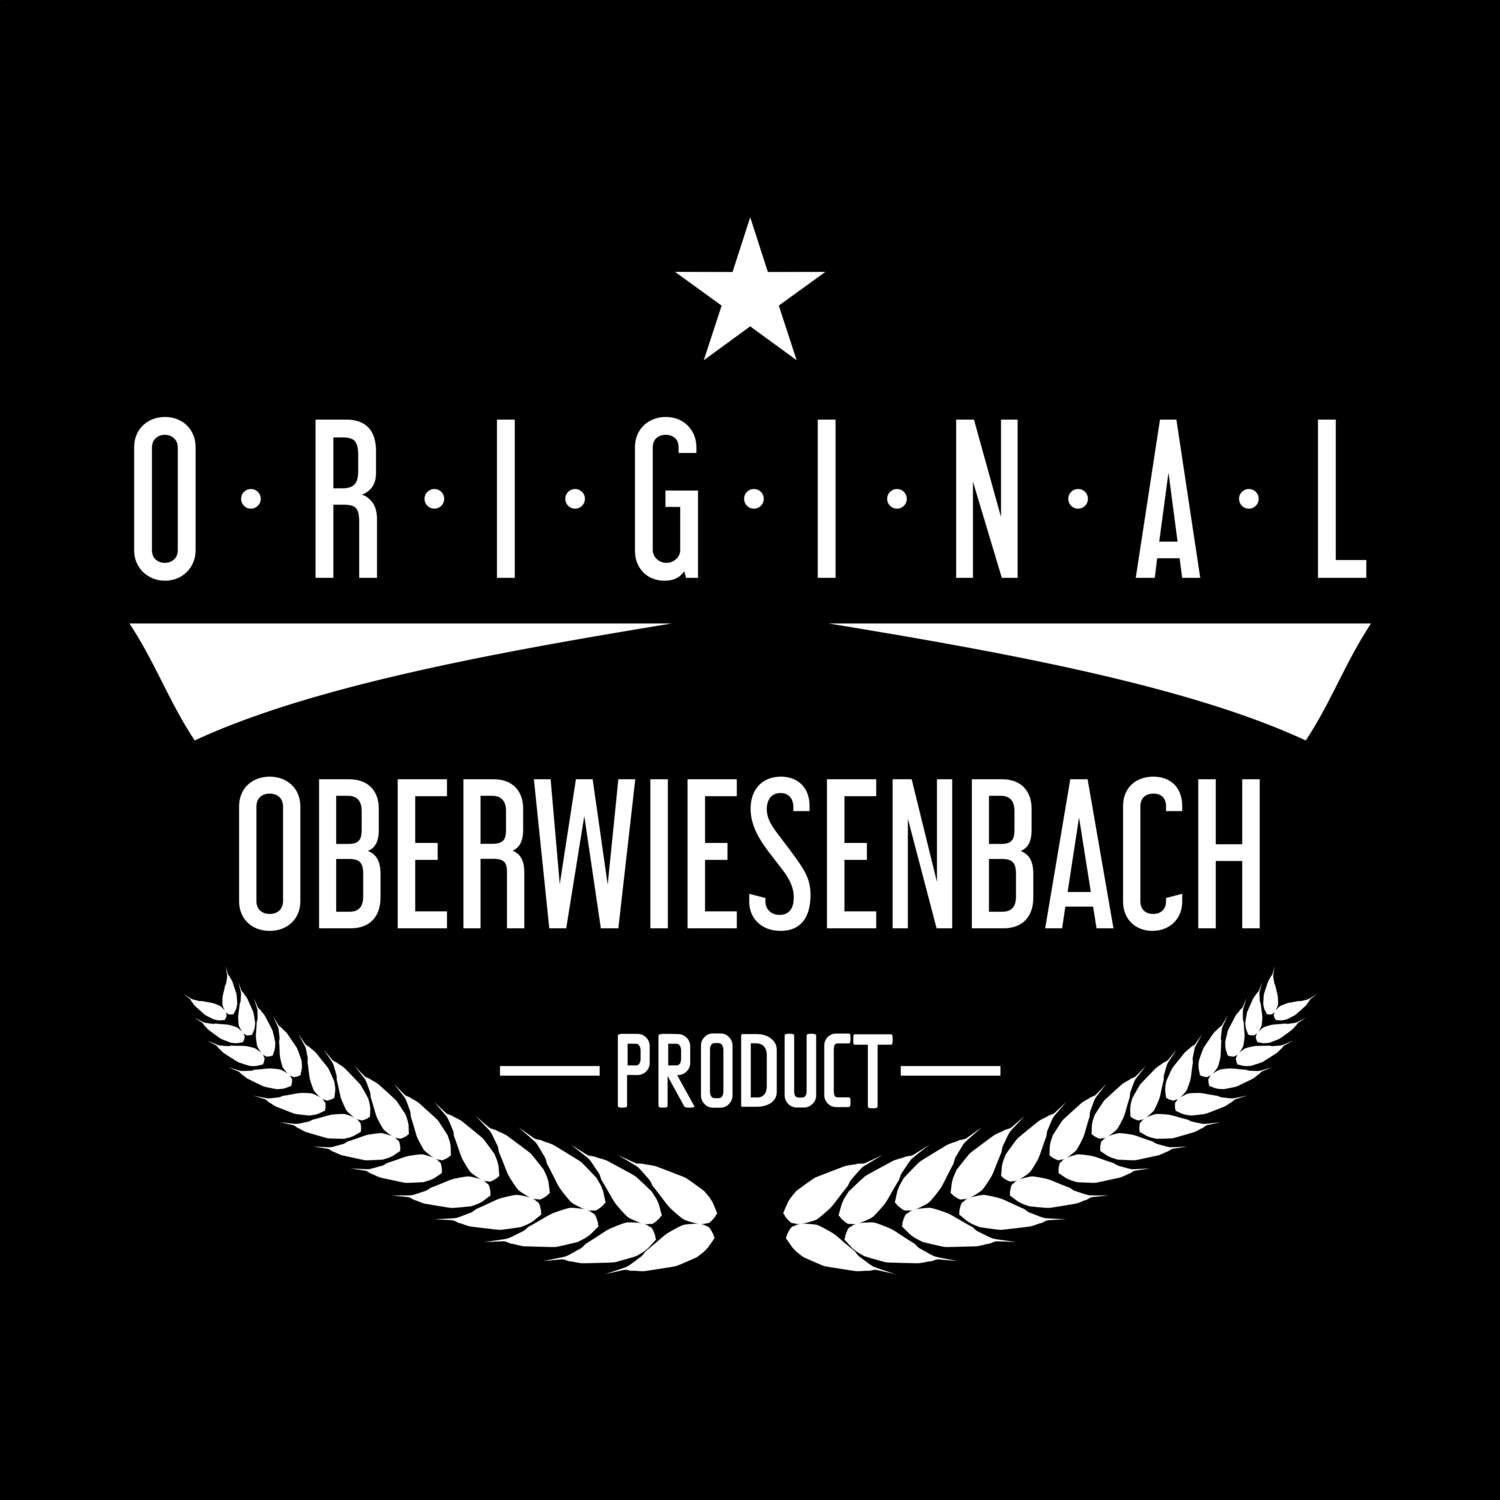 Oberwiesenbach T-Shirt »Original Product«